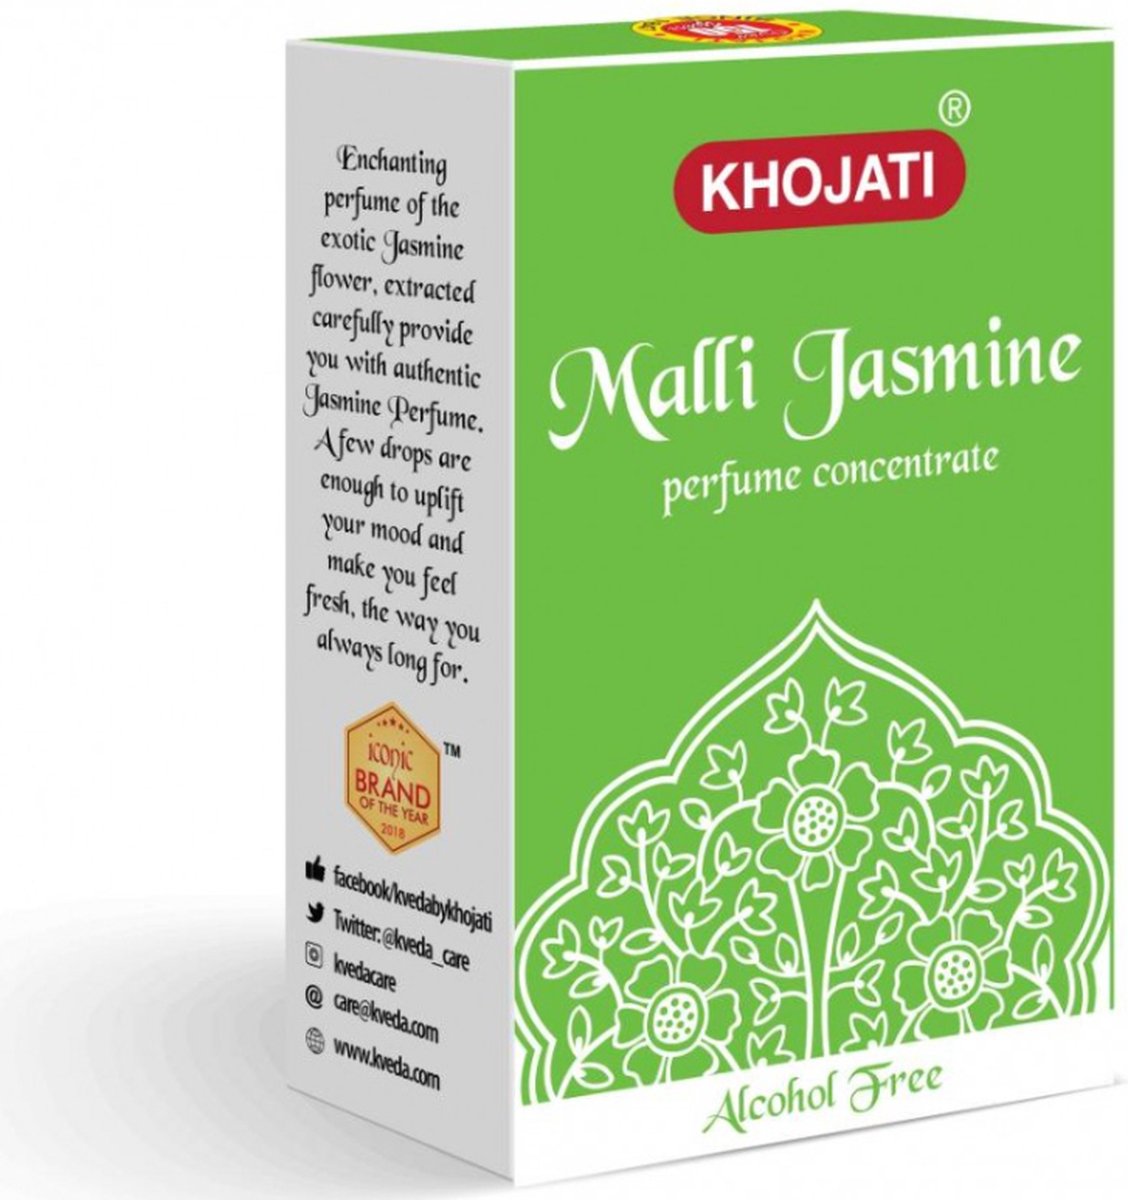 Kveda - Malli Jasmine perfume concentrate - Alcohol free - Net Content 6 ml